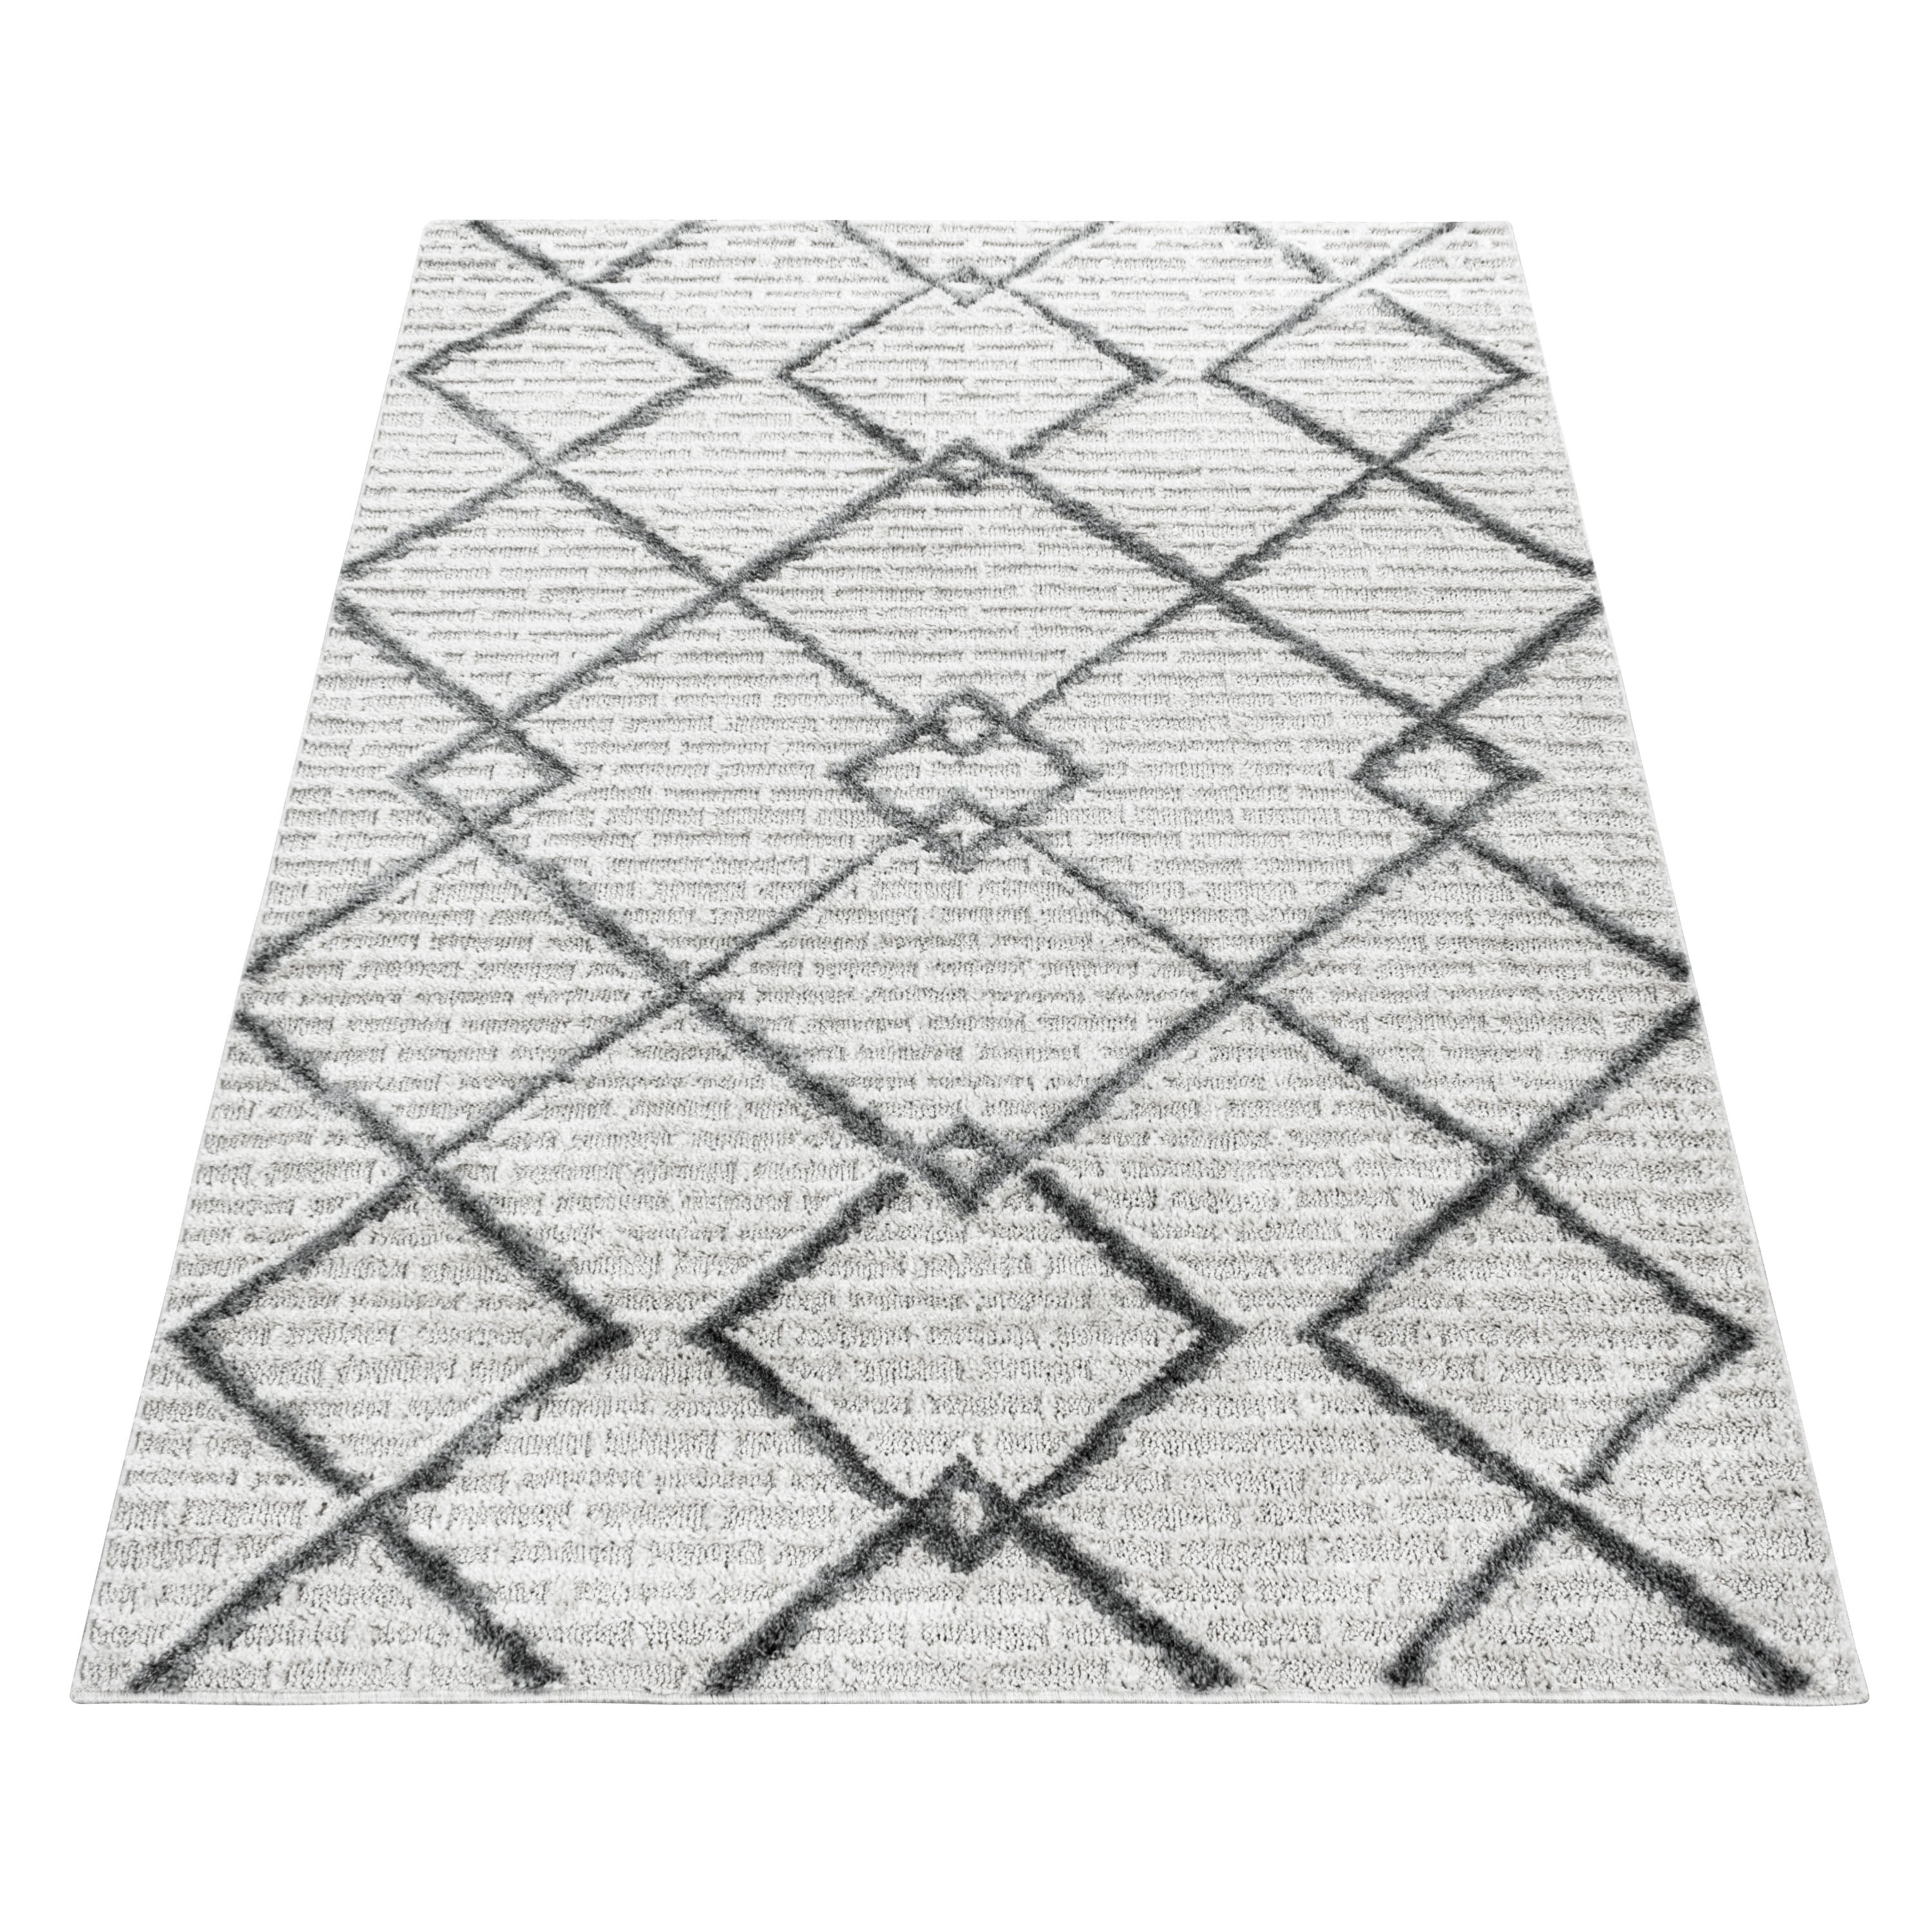 Kurzflor Design Teppich Looped Flor Gitter Muster Abstrakt